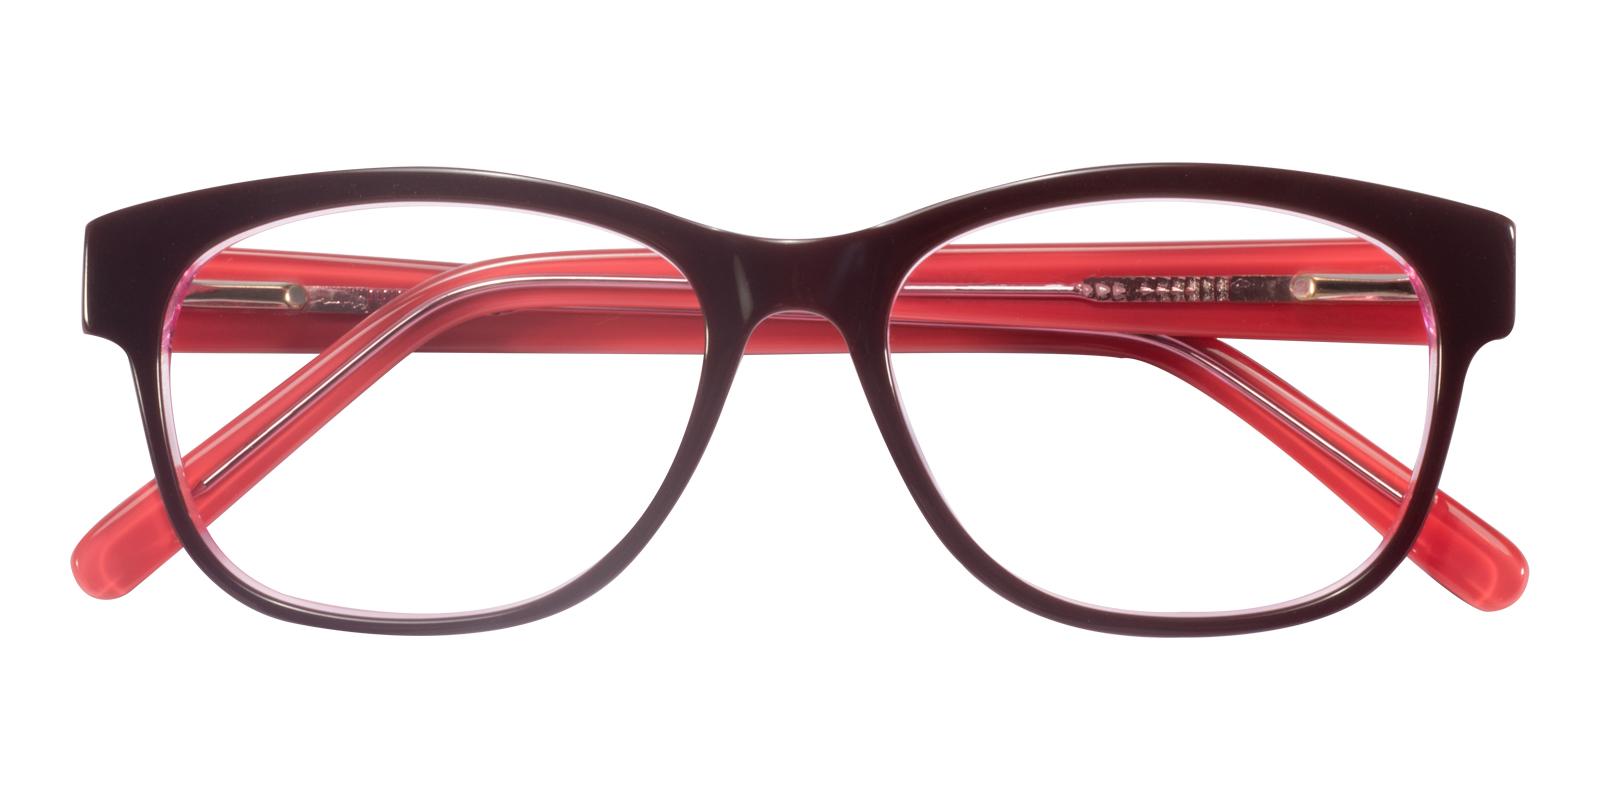 Doubell Red Acetate Eyeglasses , UniversalBridgeFit Frames from ABBE Glasses